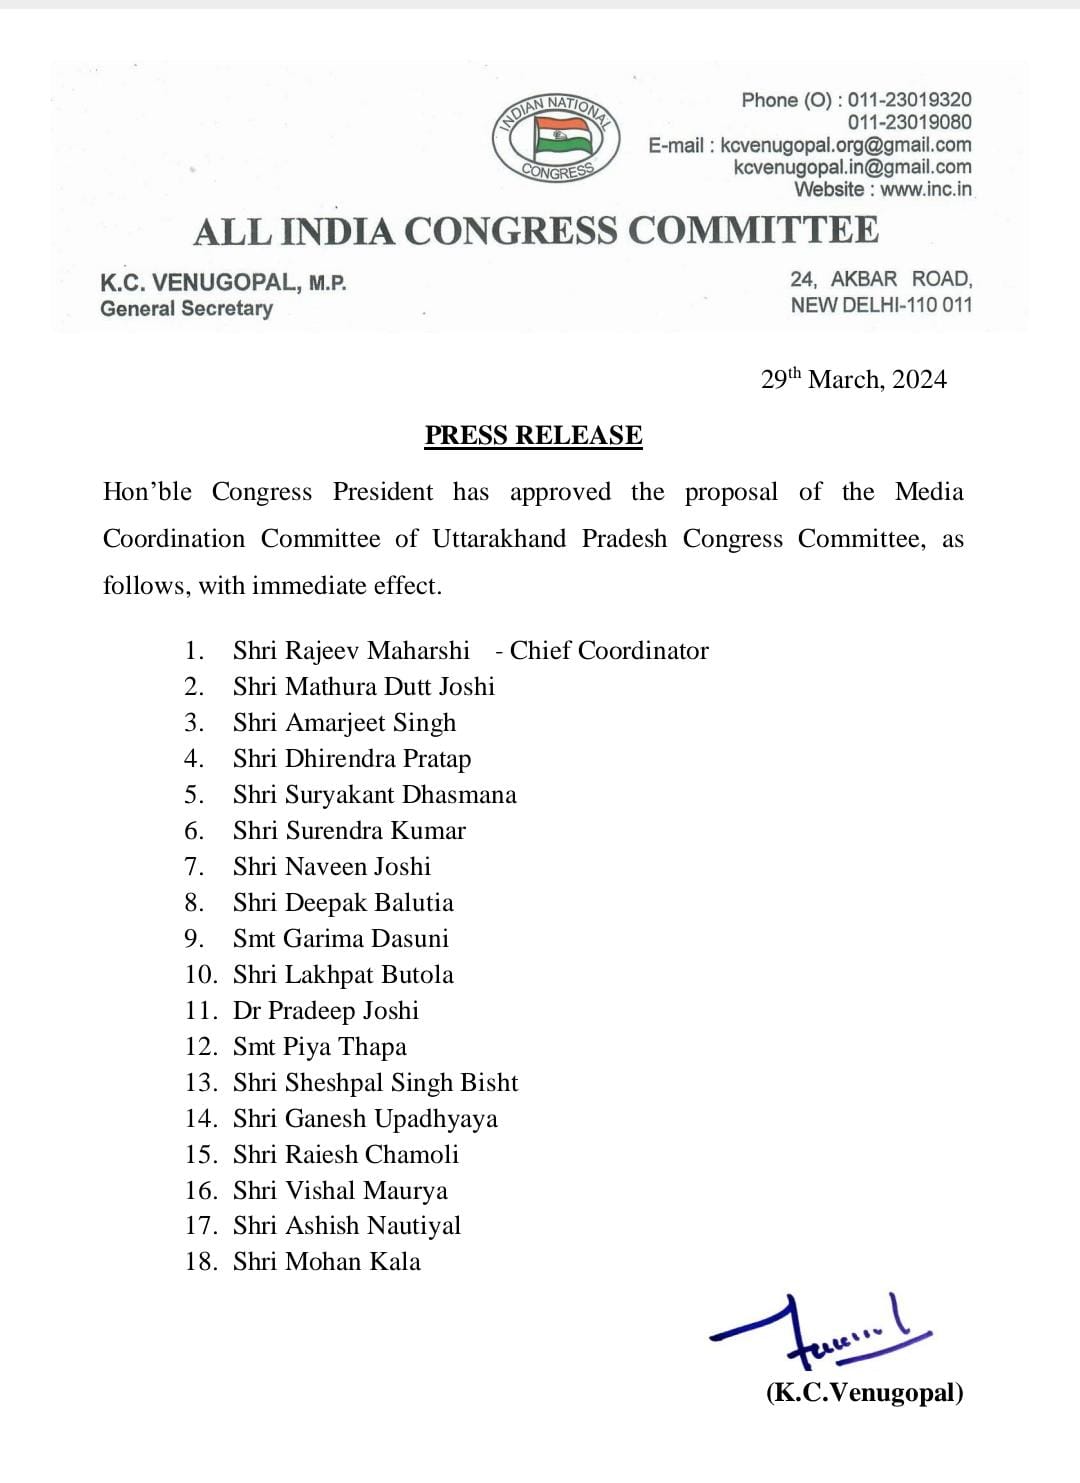 Uttarakhand Congress Media Coordination